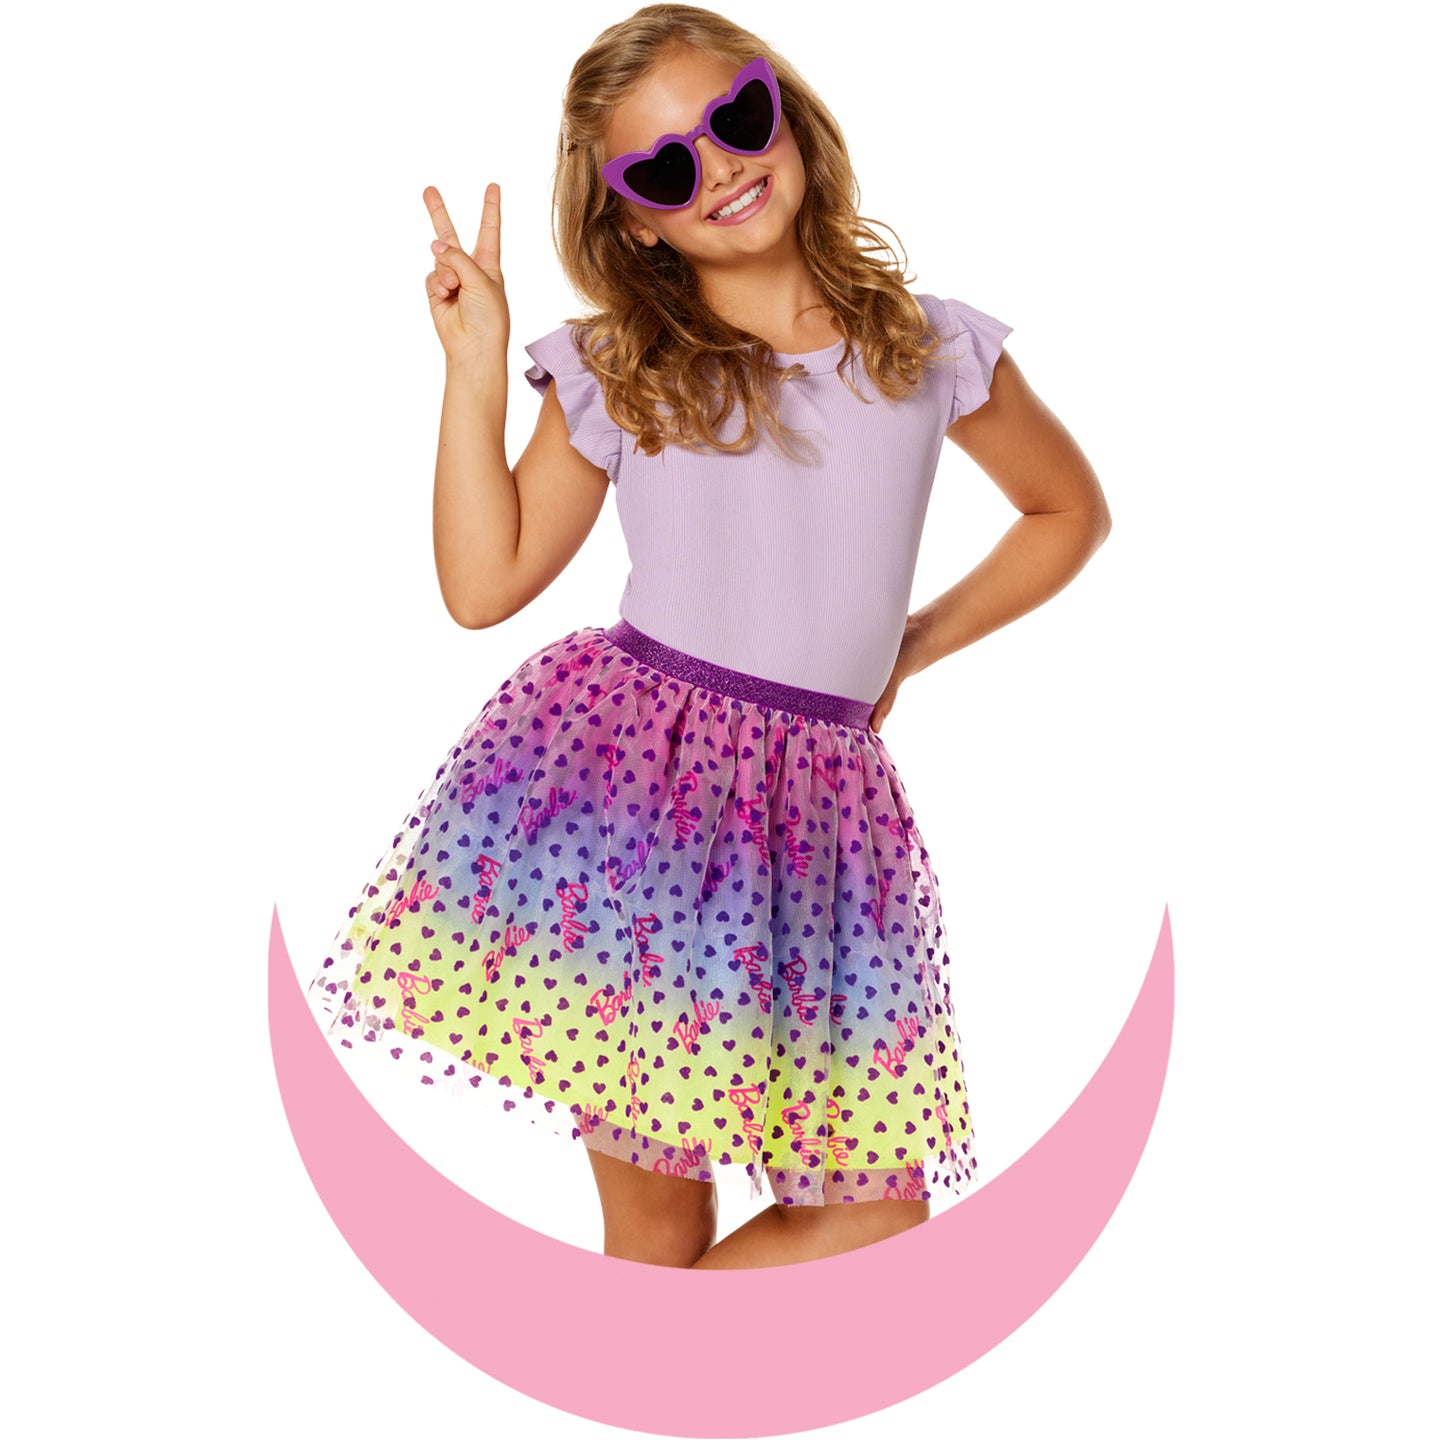 InSpirit Designs Youth Barbie Rainbow Accessory Kit